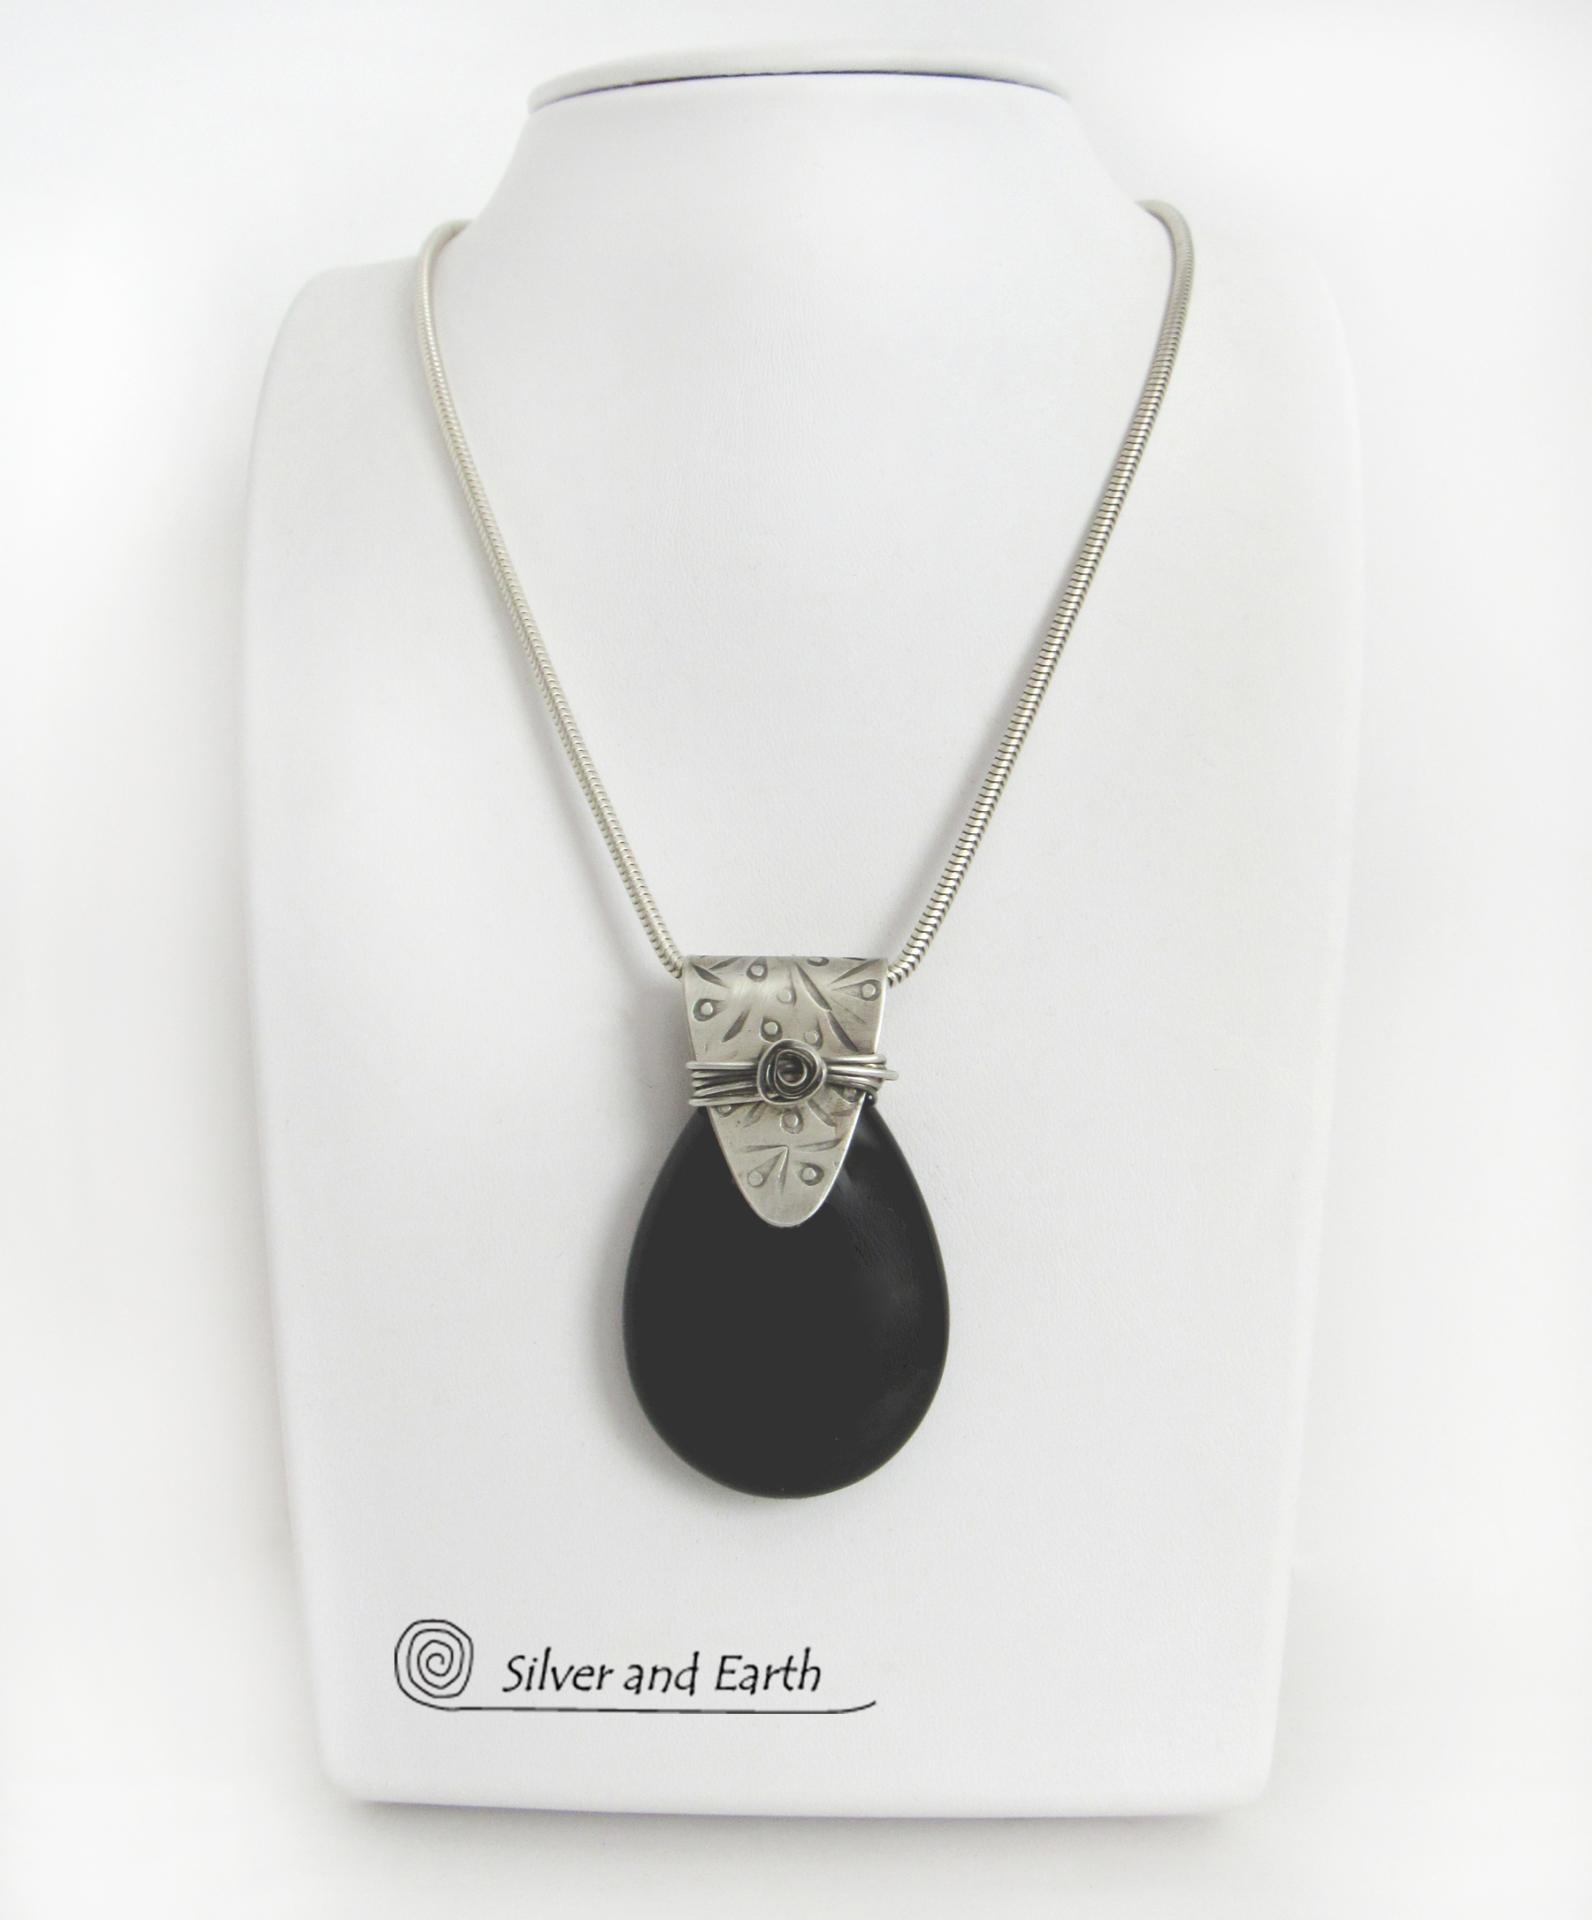 Black Onyx Sterling Silver Pendant Necklace - Contemporary Modern Gemstone Jewelry